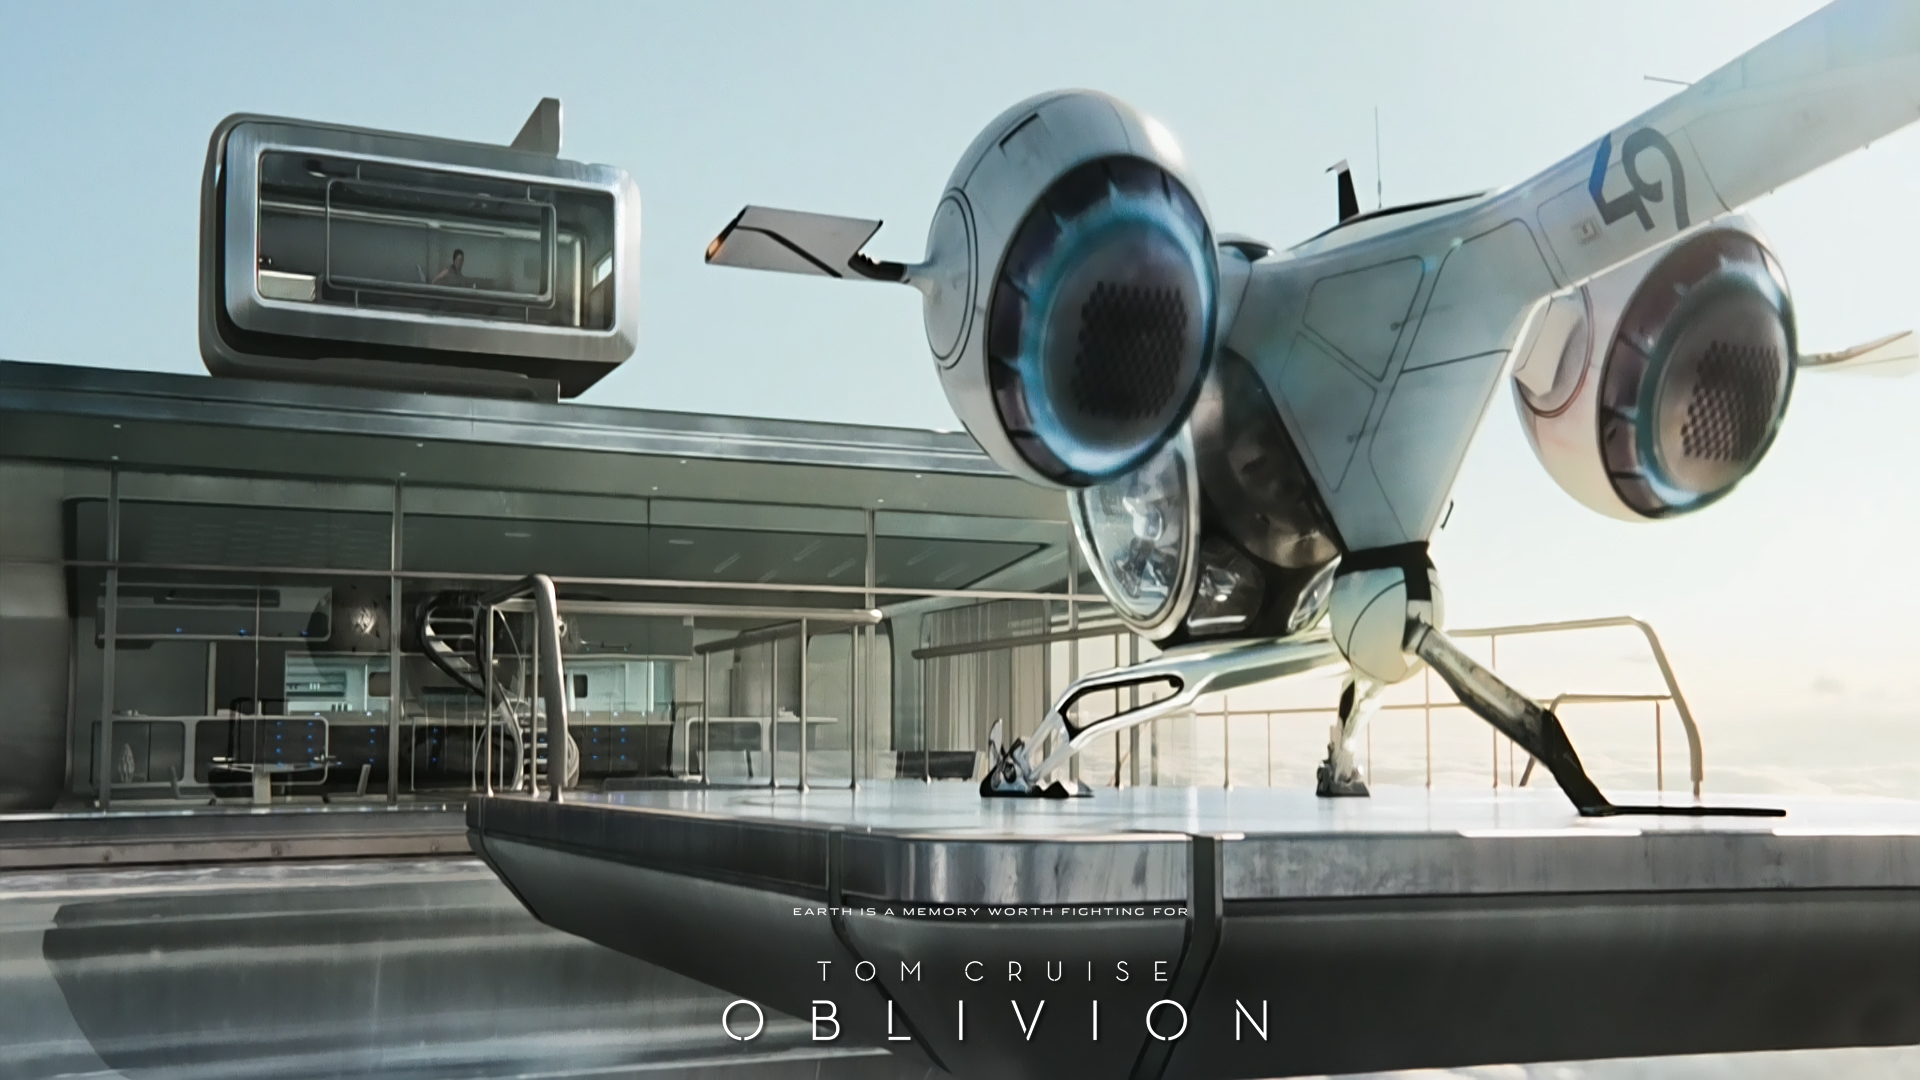 Amazing Oblivion Pictures & Backgrounds